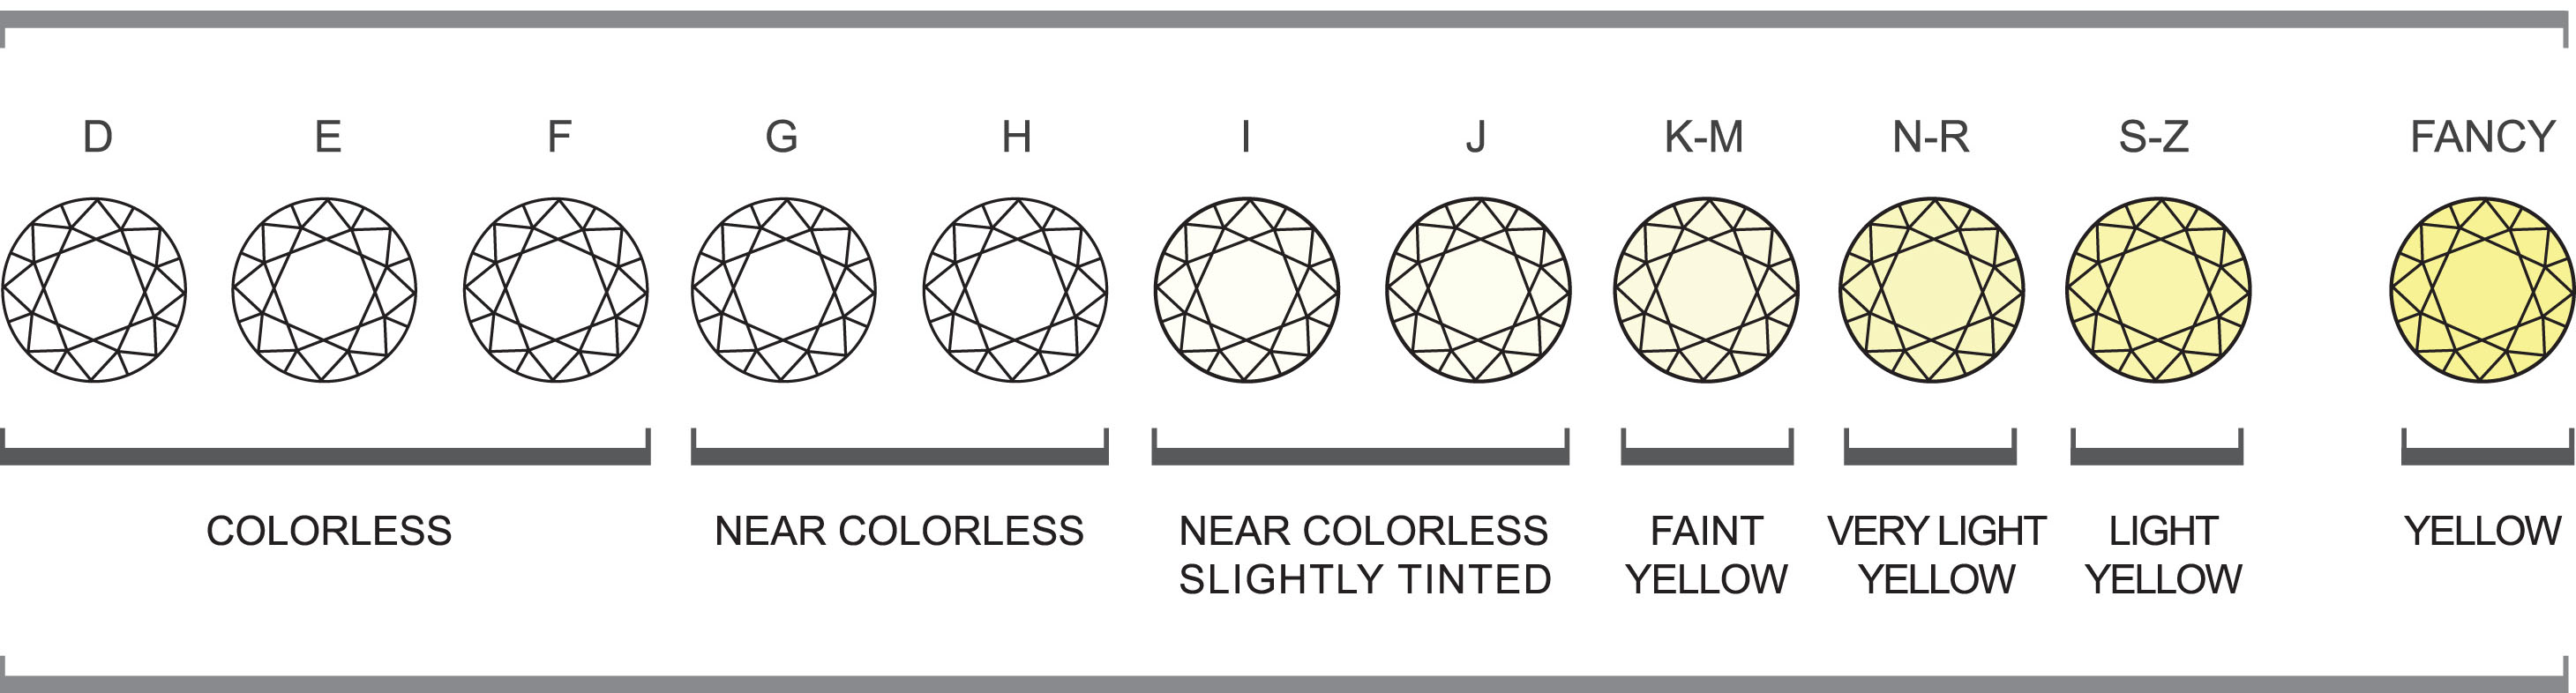 Diamond Cut Clarity Color Chart